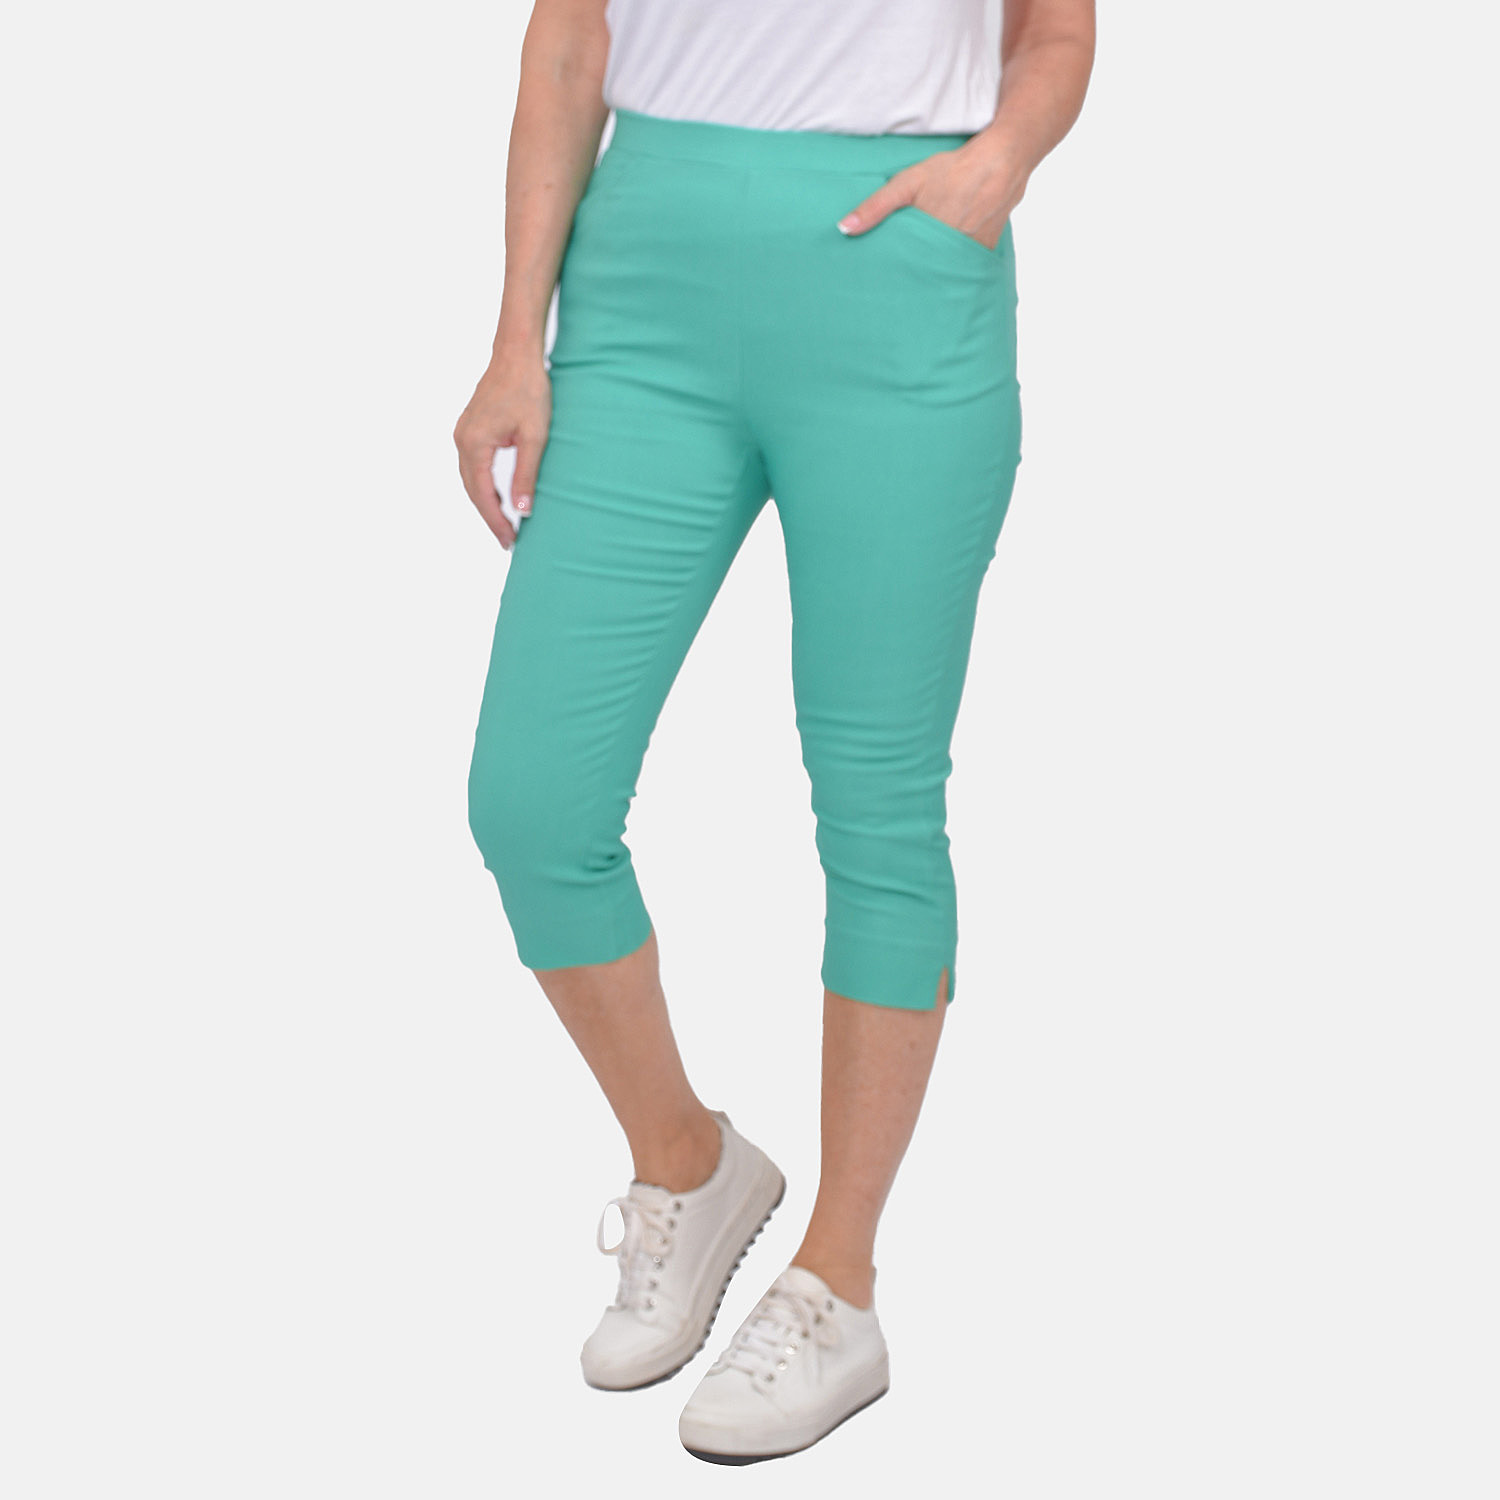 Viscose-Jean-and-Pant-Trouser-Size-1x1-cm-Mint